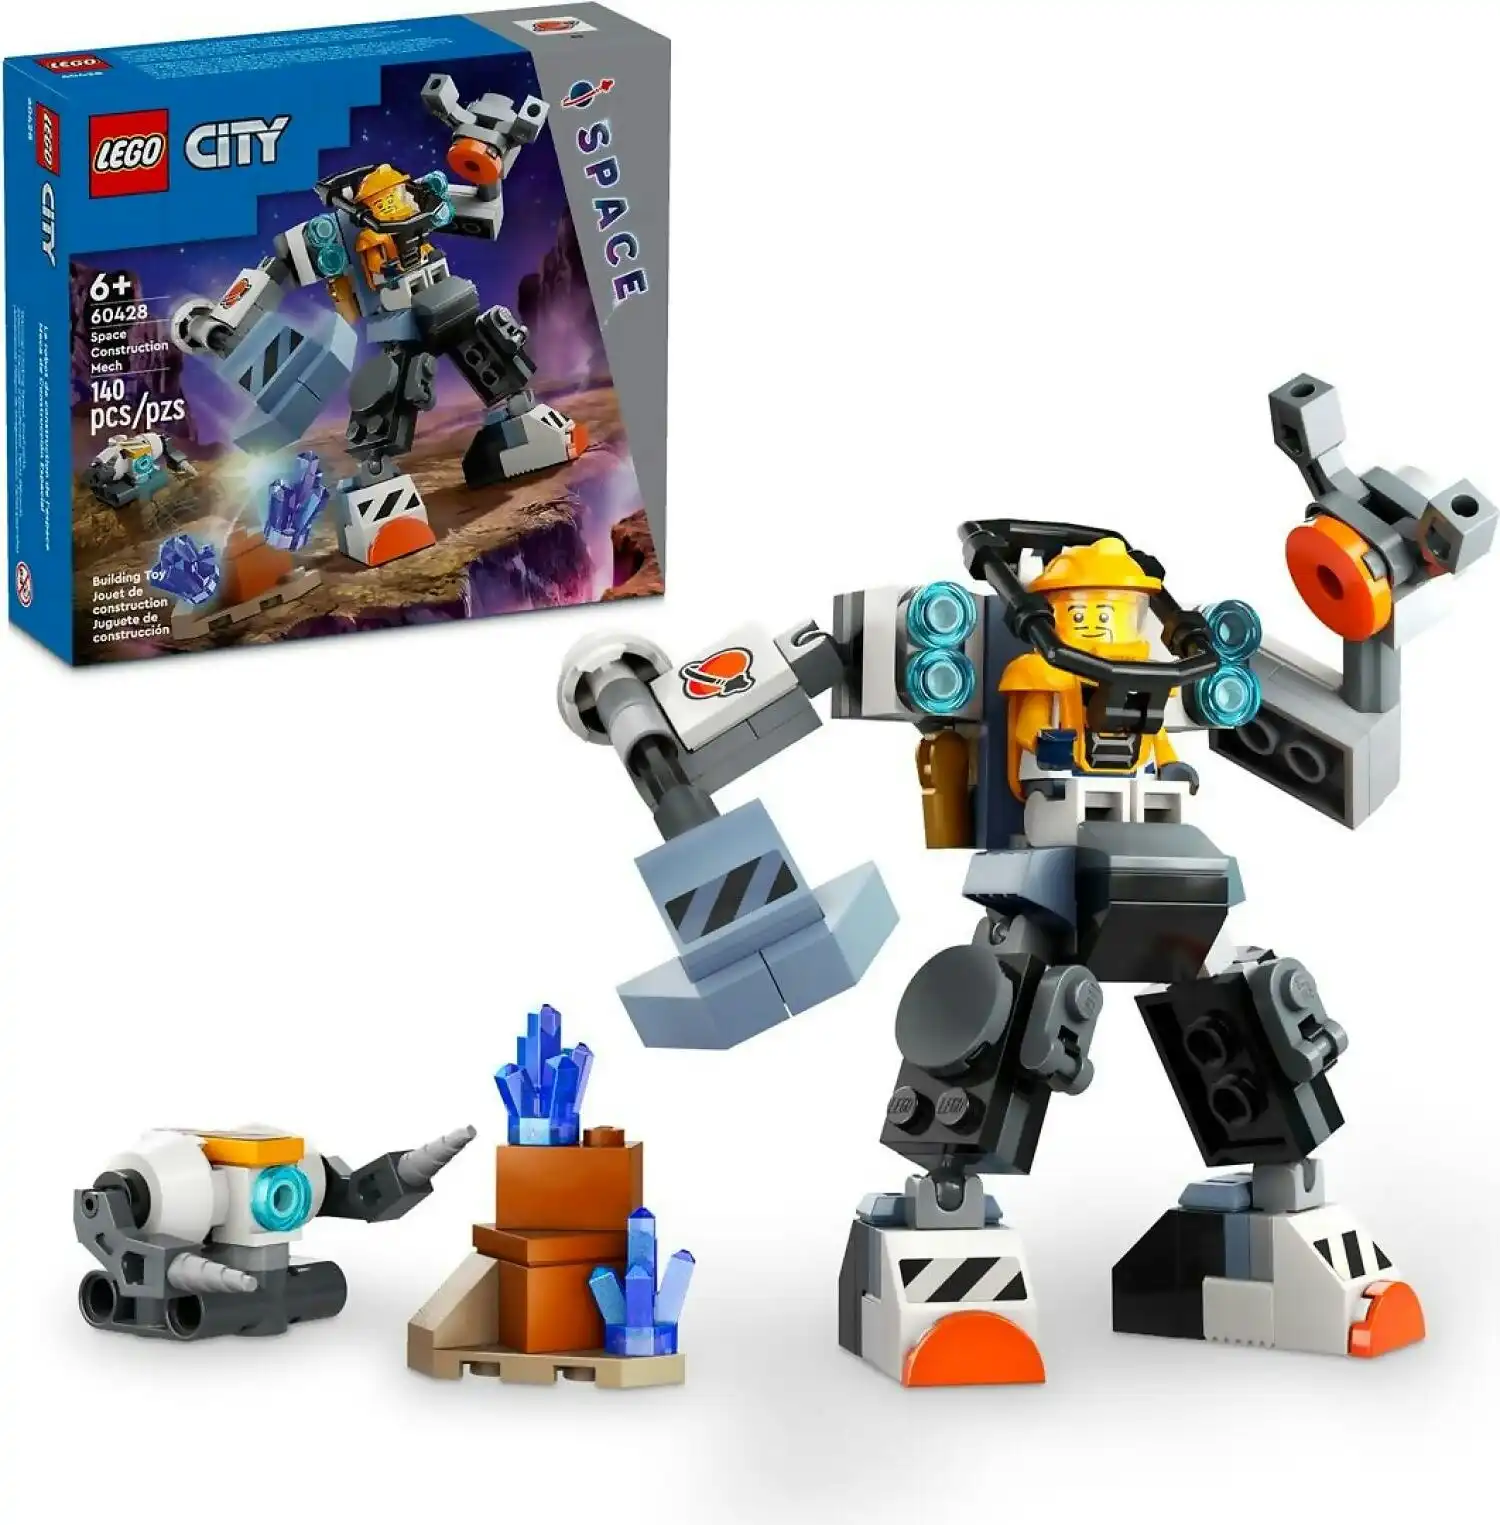 LEGO 60428 Space Construction Mech - City